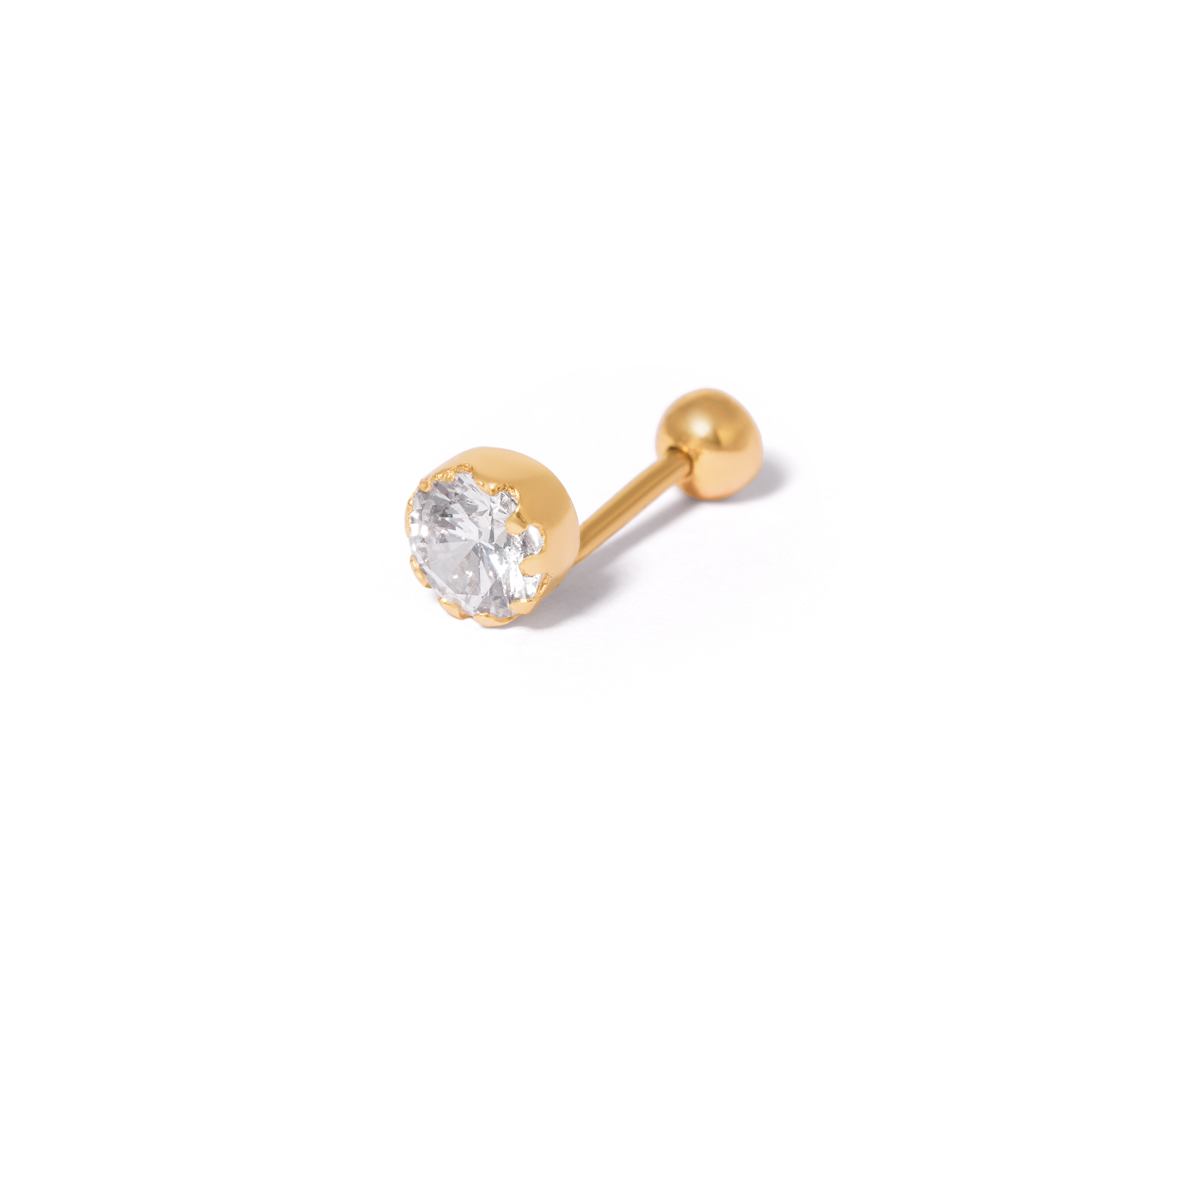 Single gem gold piercing g